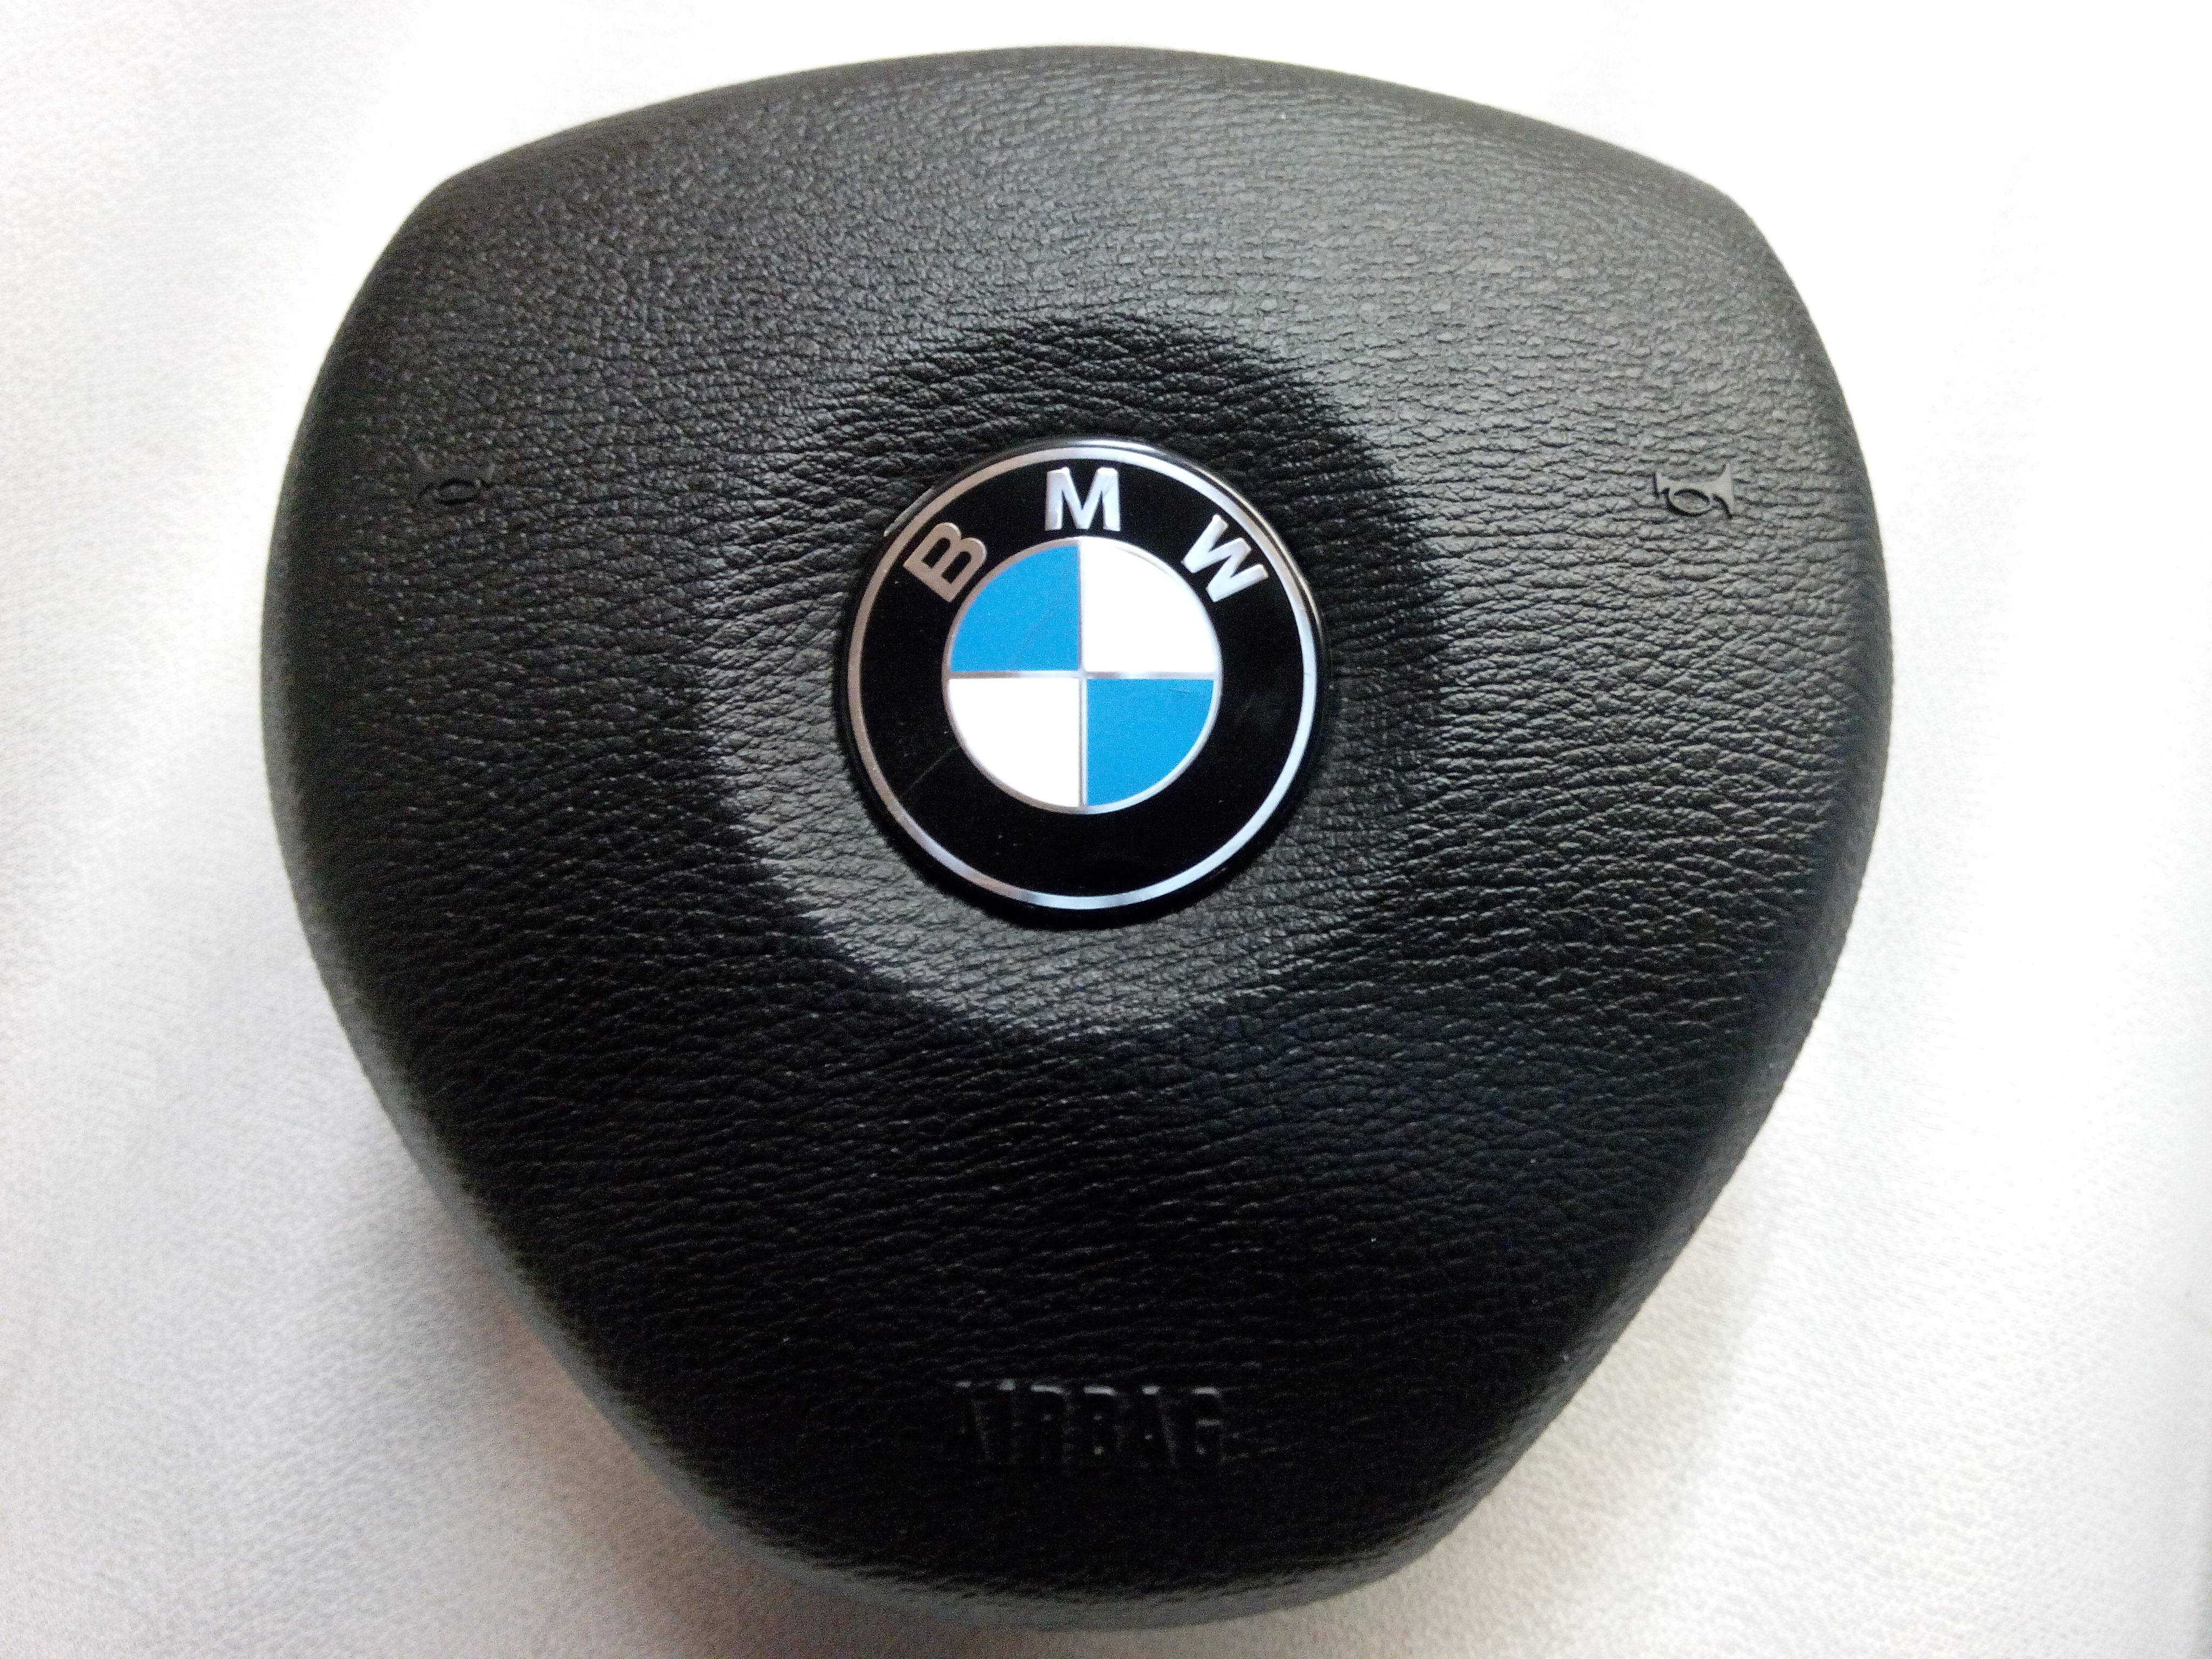 Накладка подушки безопасности. Руль BMW x6 e71. Заглушка airbag BMW x3. Руль БМВ x3 e83. Накладка на руль БМВ x6 e71.